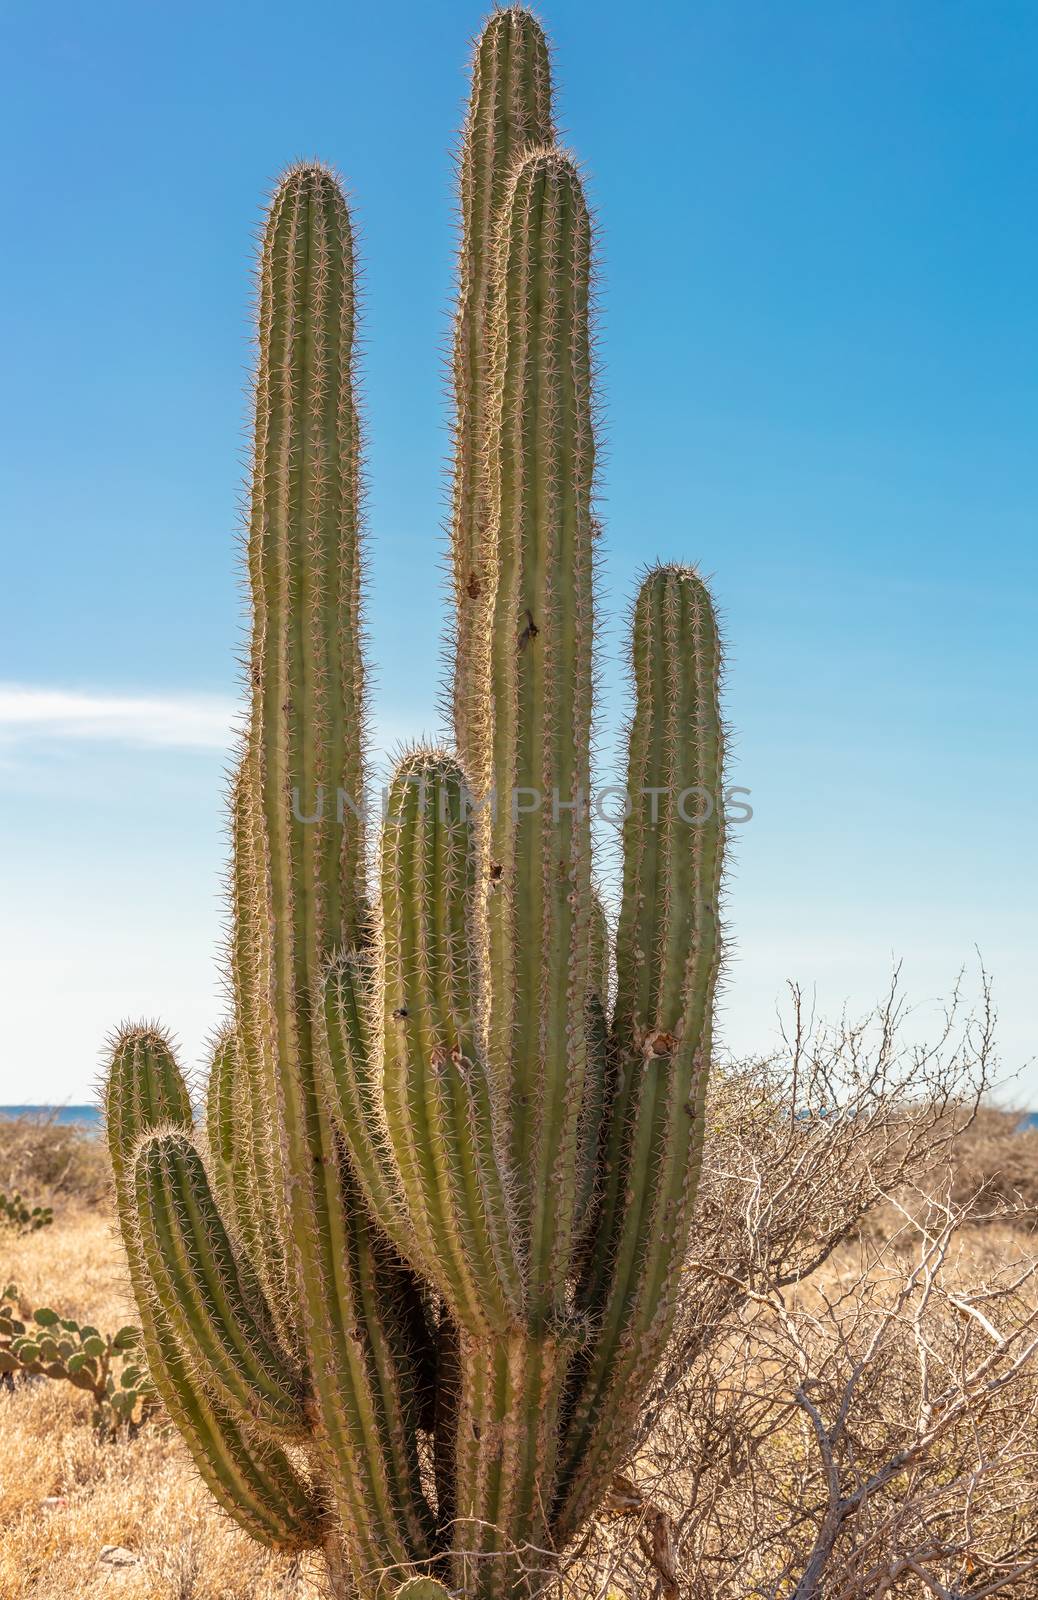 Cactus growing in dry environment in Aruba by DamantisZ